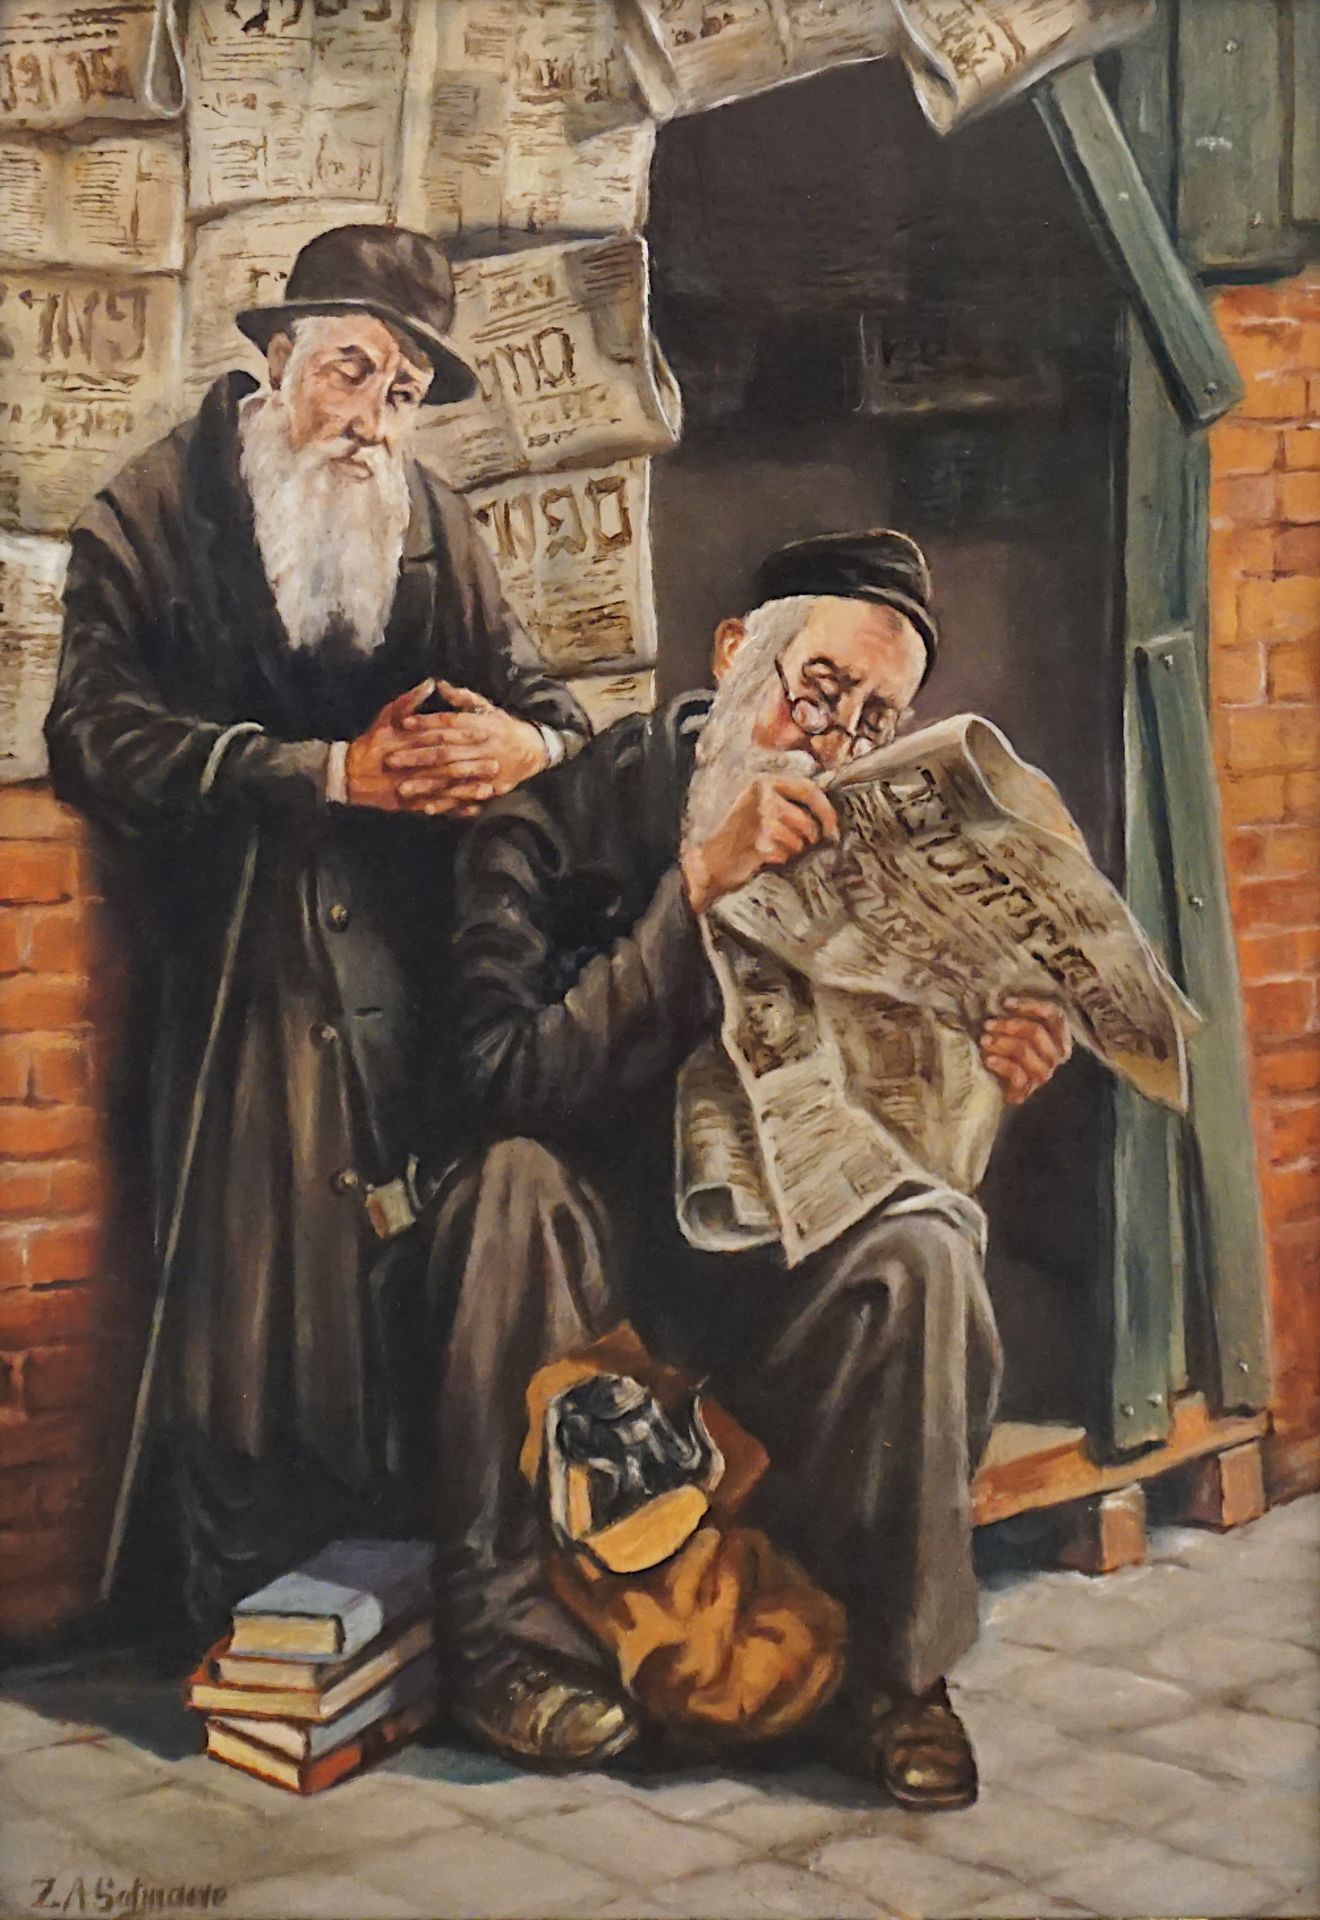 1 Ölgemälde "Der jüdische Zeitungsstand" l.u. sign. Z.A. SALTMARIE